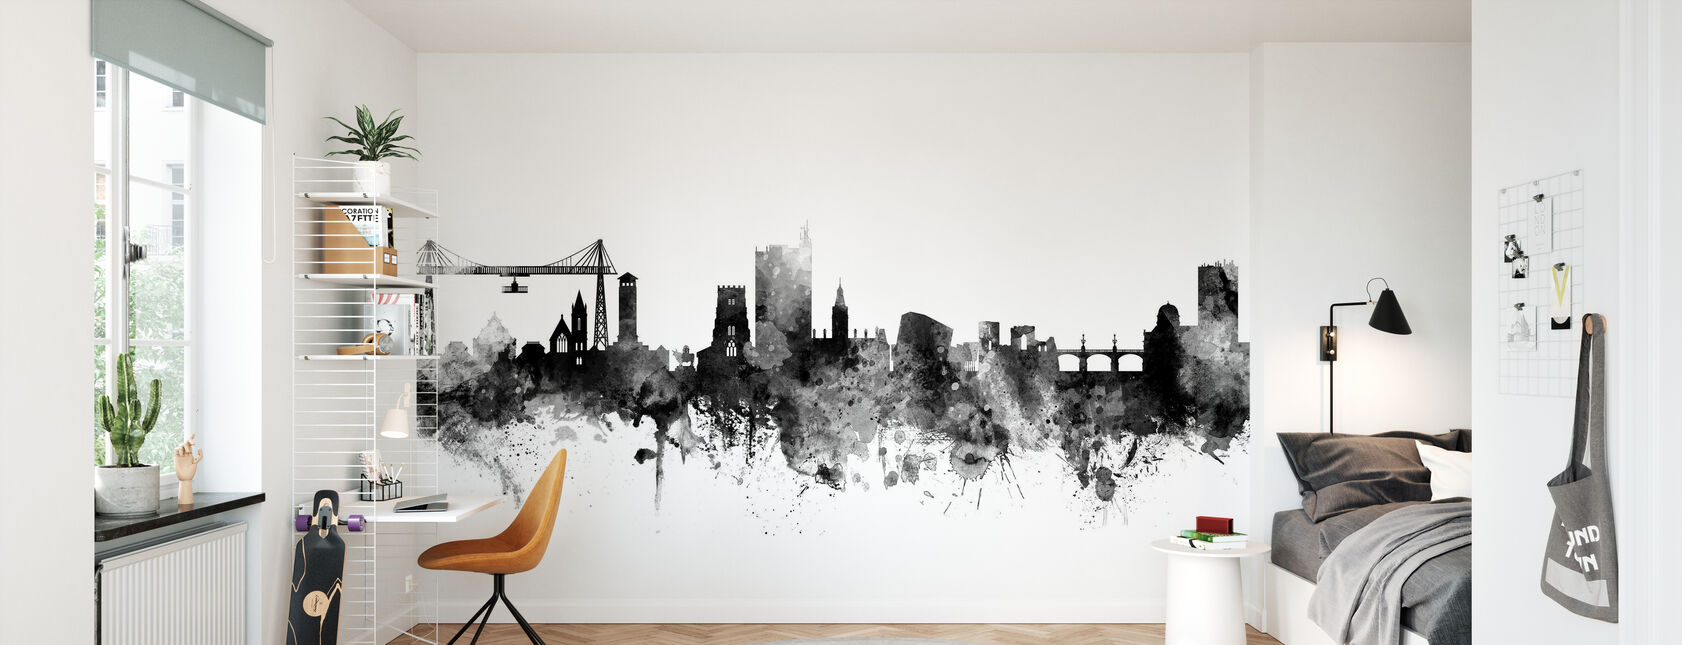 Newport Wales Skyline - Wallpaper - Kids Room